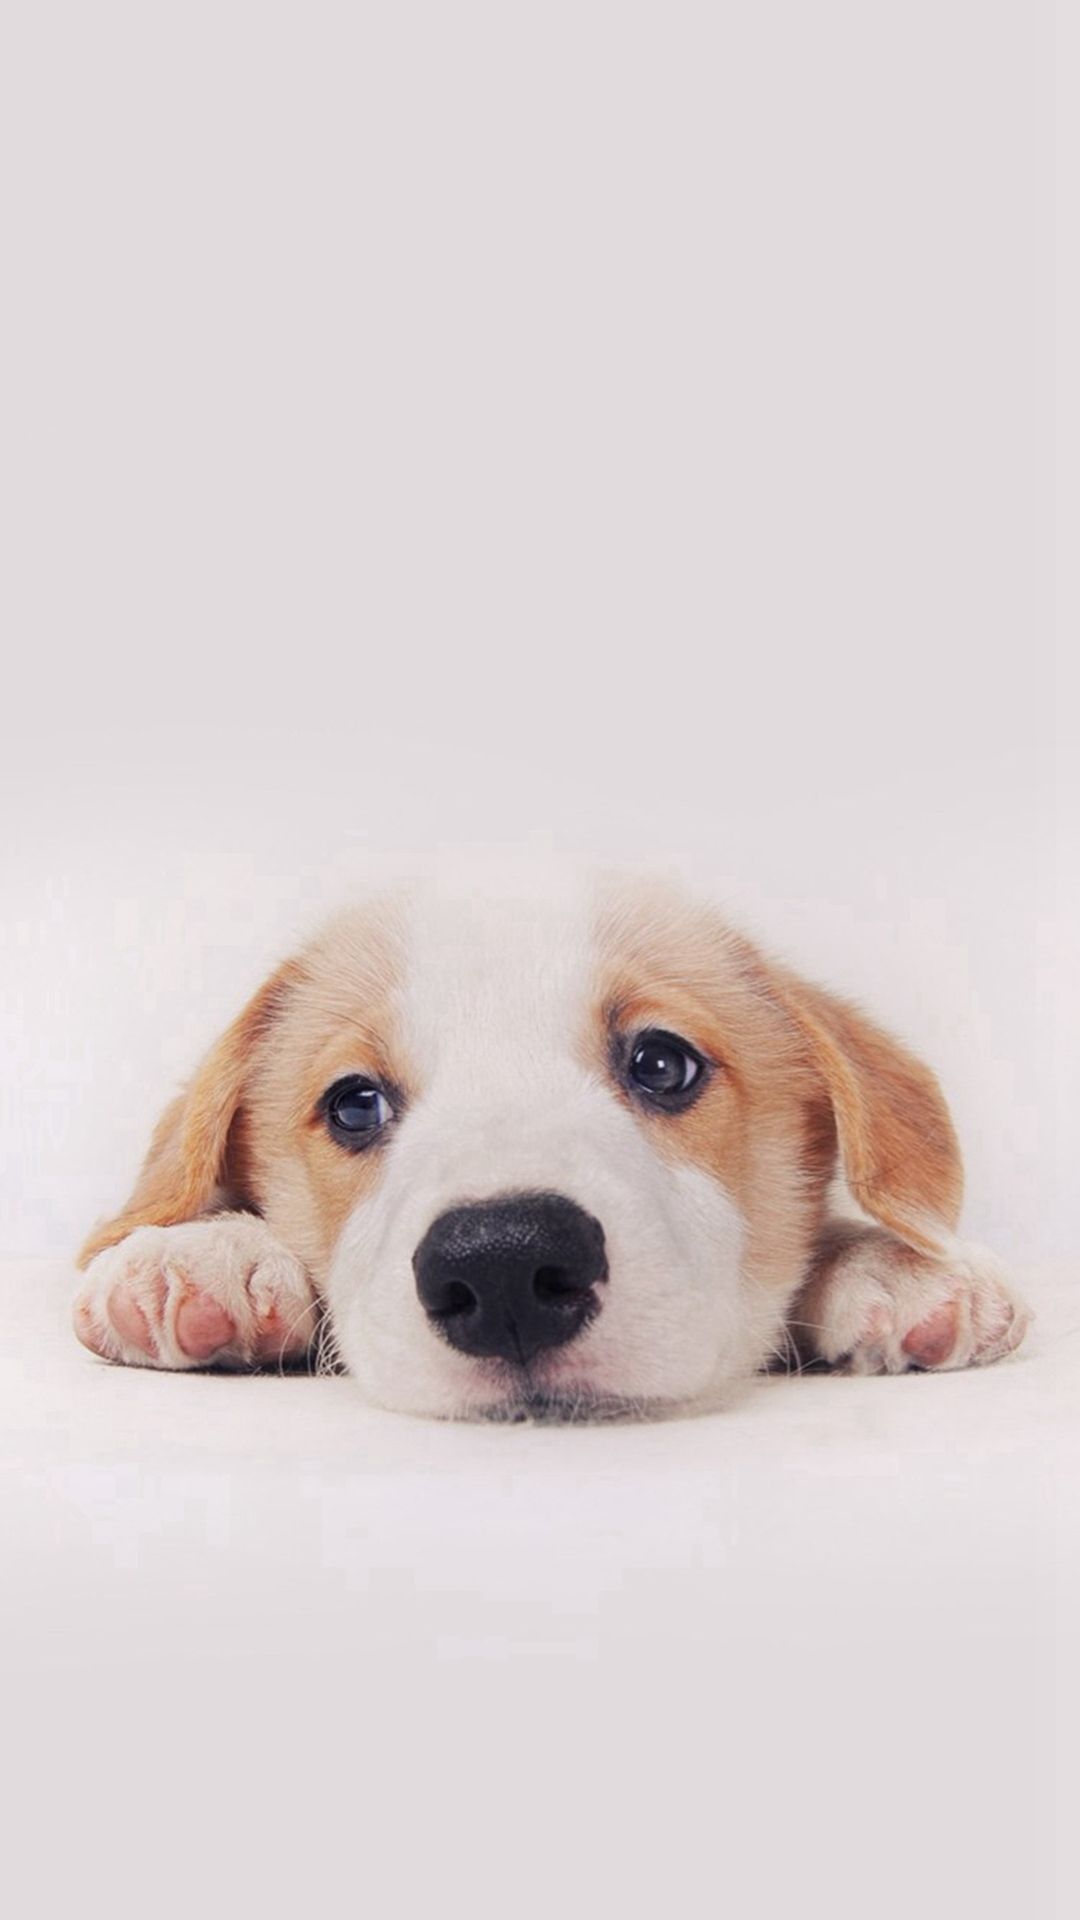 Cute Puppy Dog Pet - Cute Wallpaper For Iphone 6s Hd - 1080x1920 Wallpaper  